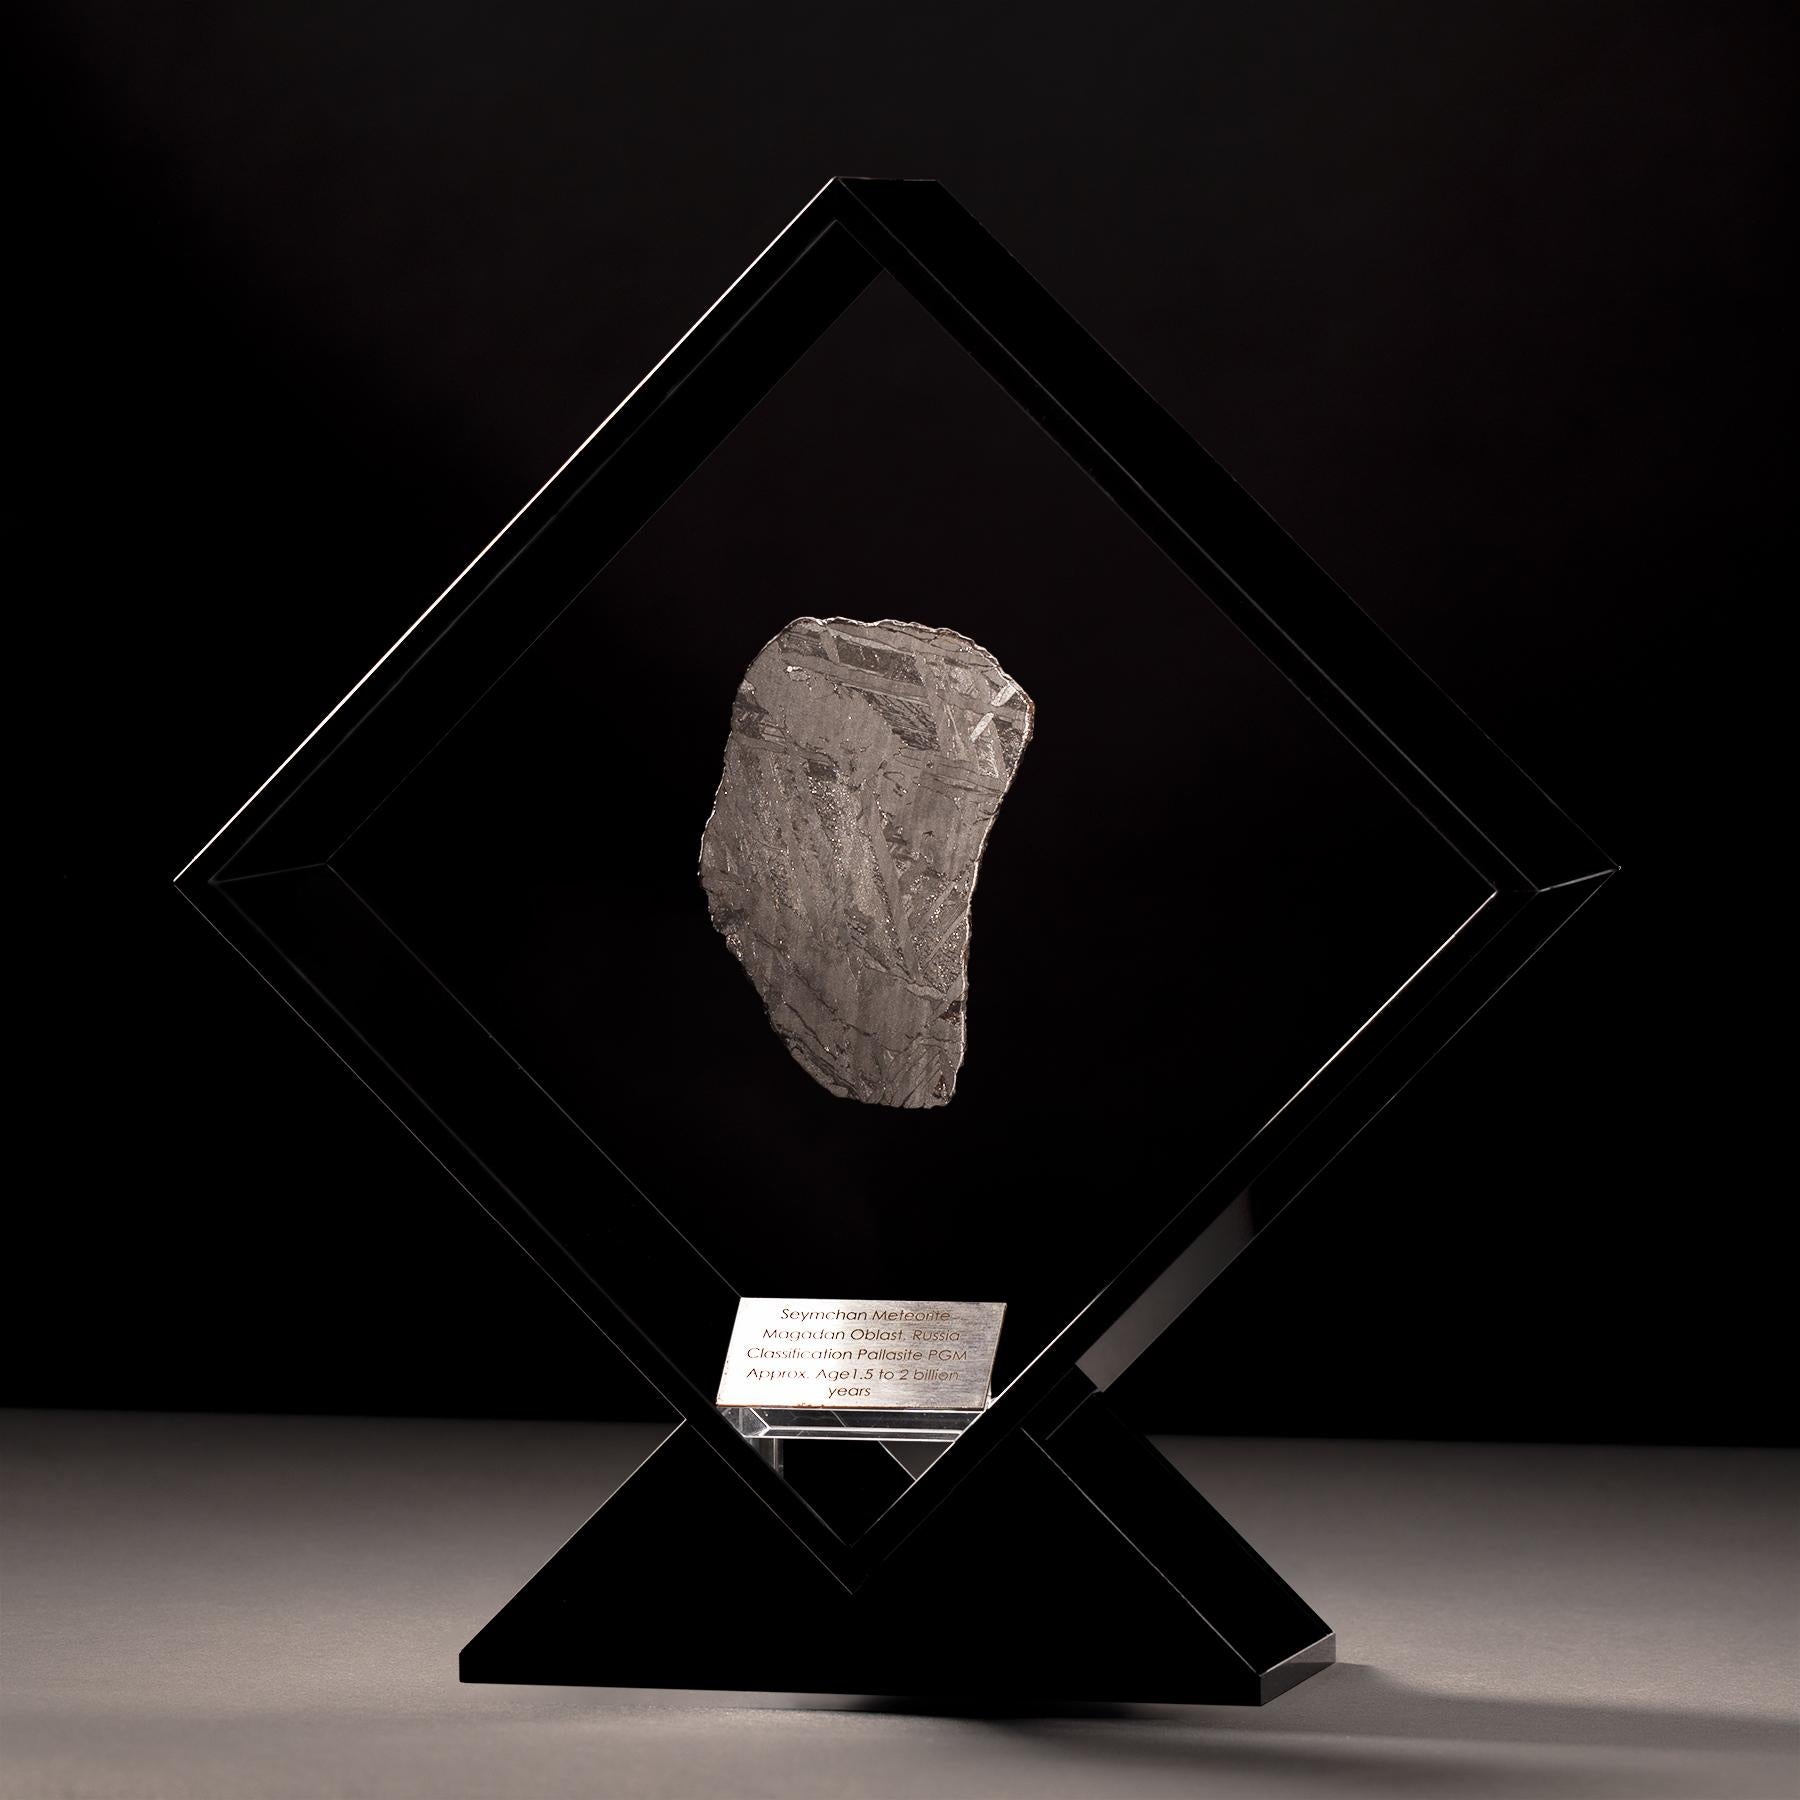 Organic Modern Original Design, Seymchan Meteorite in a Black Acrylic Display For Sale